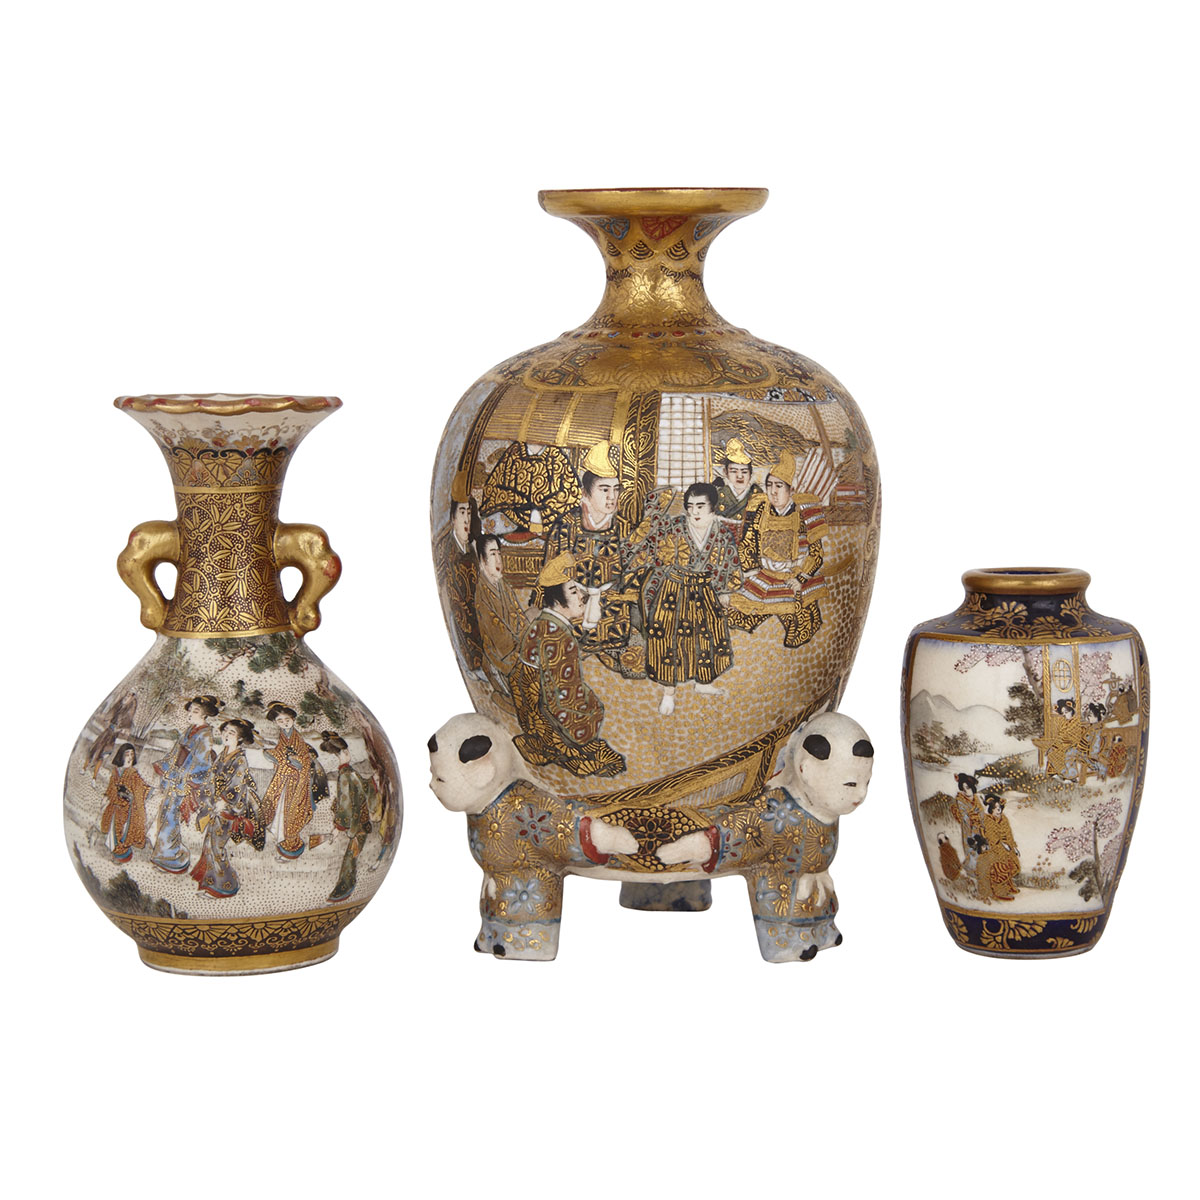 Group of Three Satsuma Vases, Early 20th Century